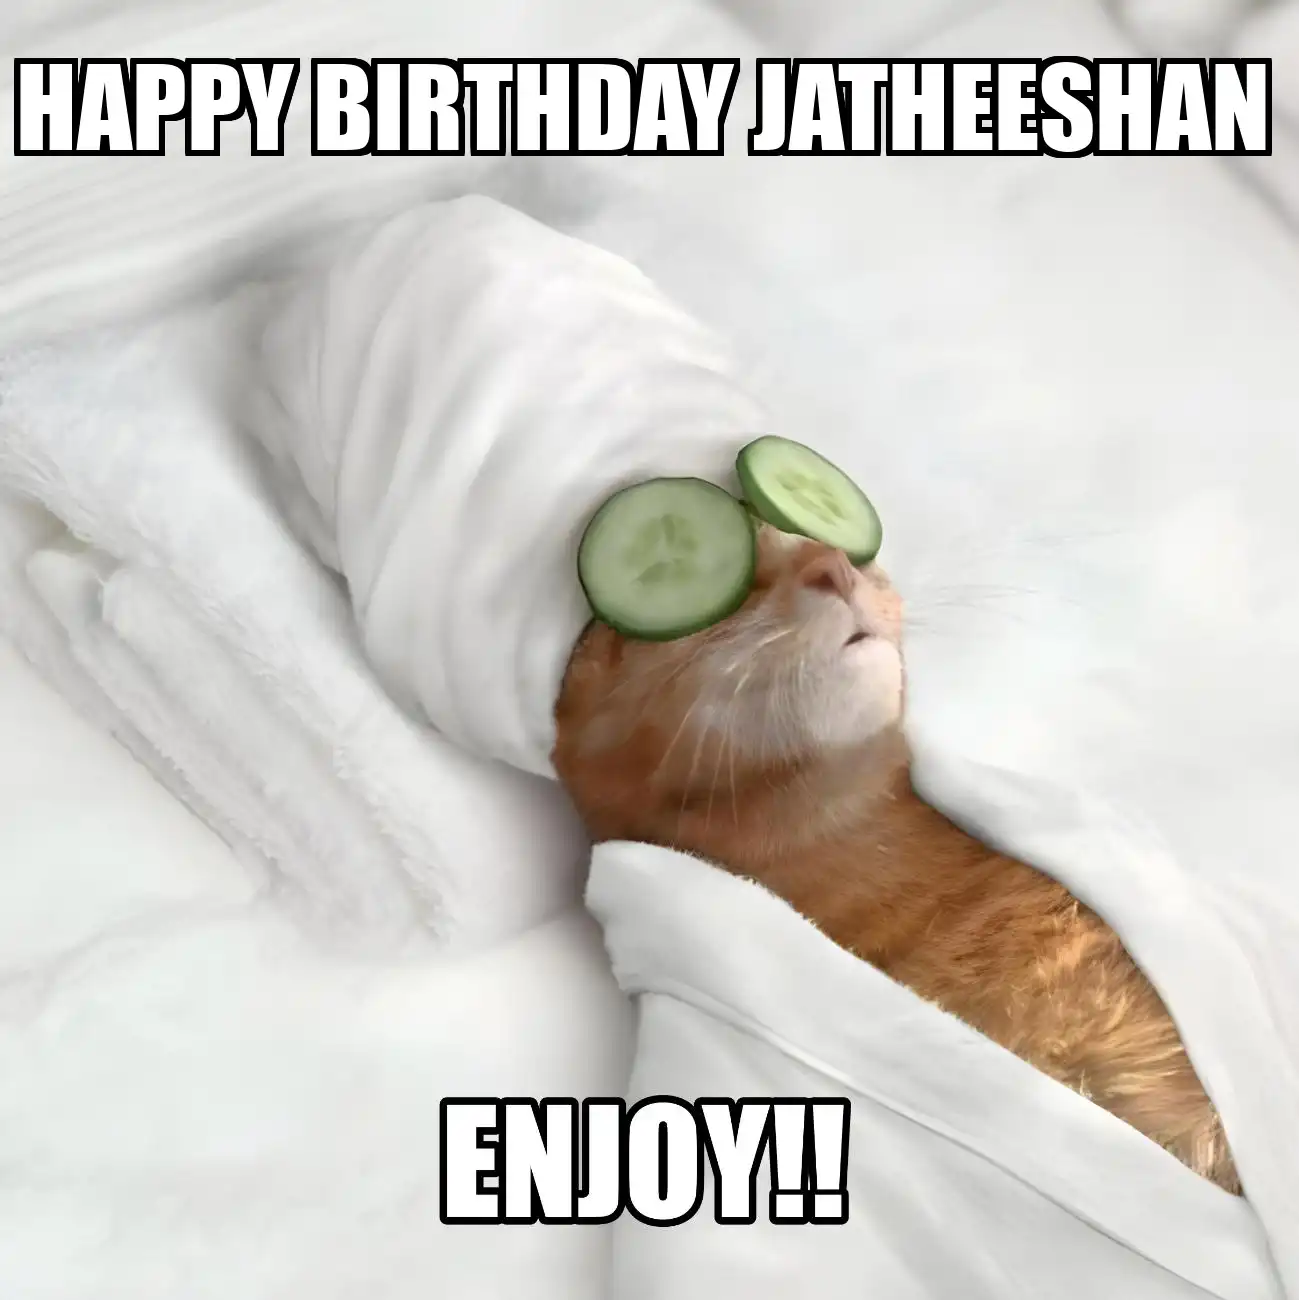 Happy Birthday Jatheeshan Enjoy Cat Meme